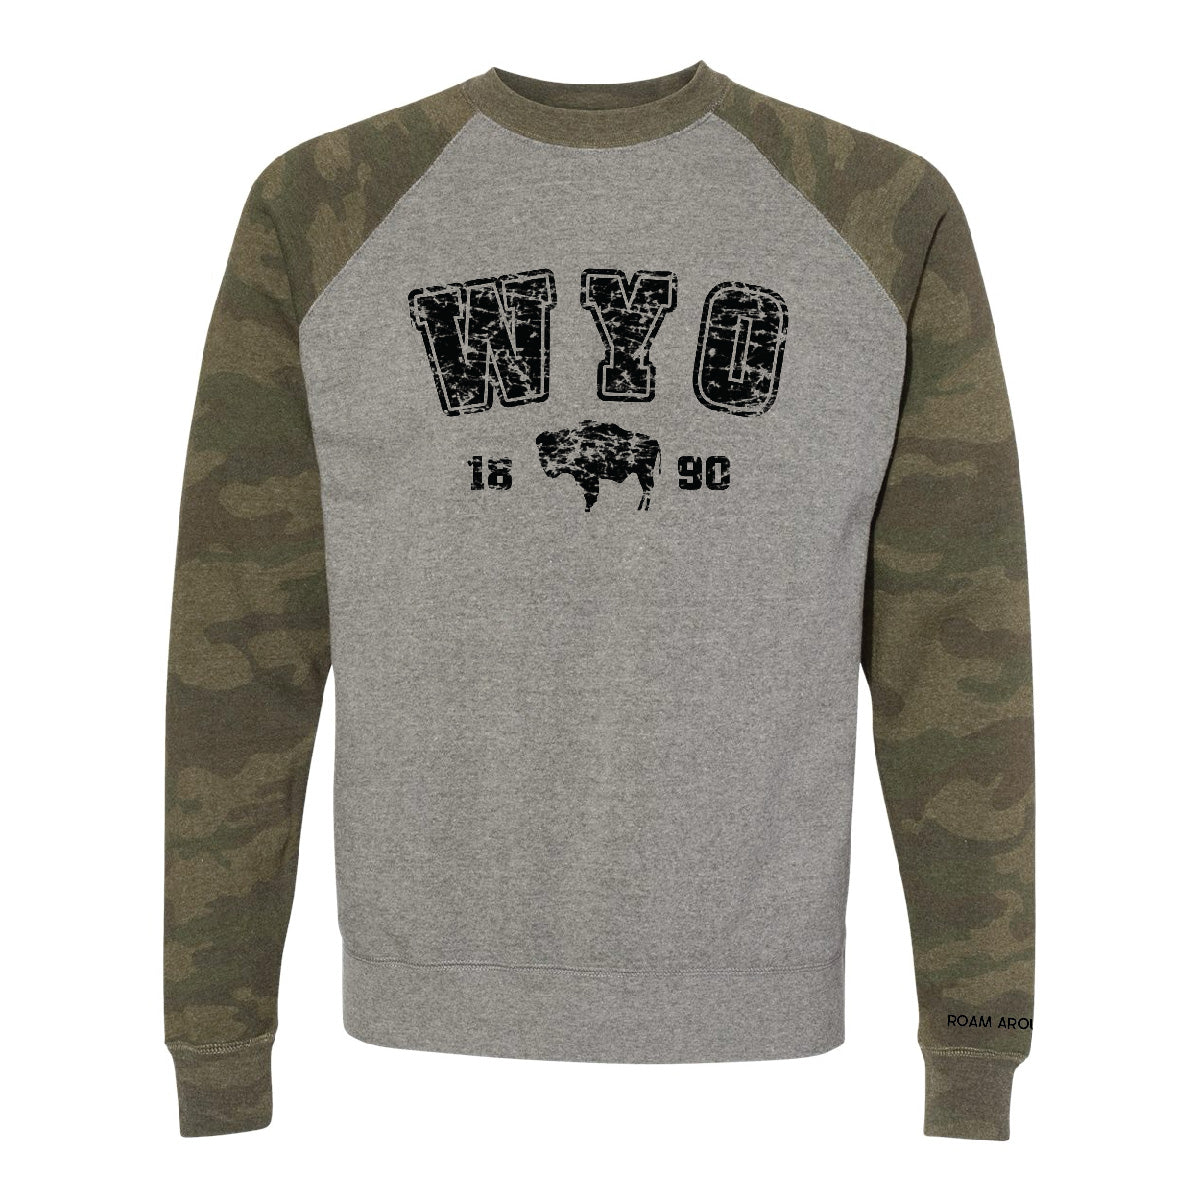 WYO Sweatshirt. Crew camo sweatshirt. Bison sweatshirt. Roam Around Wear is a Wyoming t-shirt company based out of Gillette, Wyoming